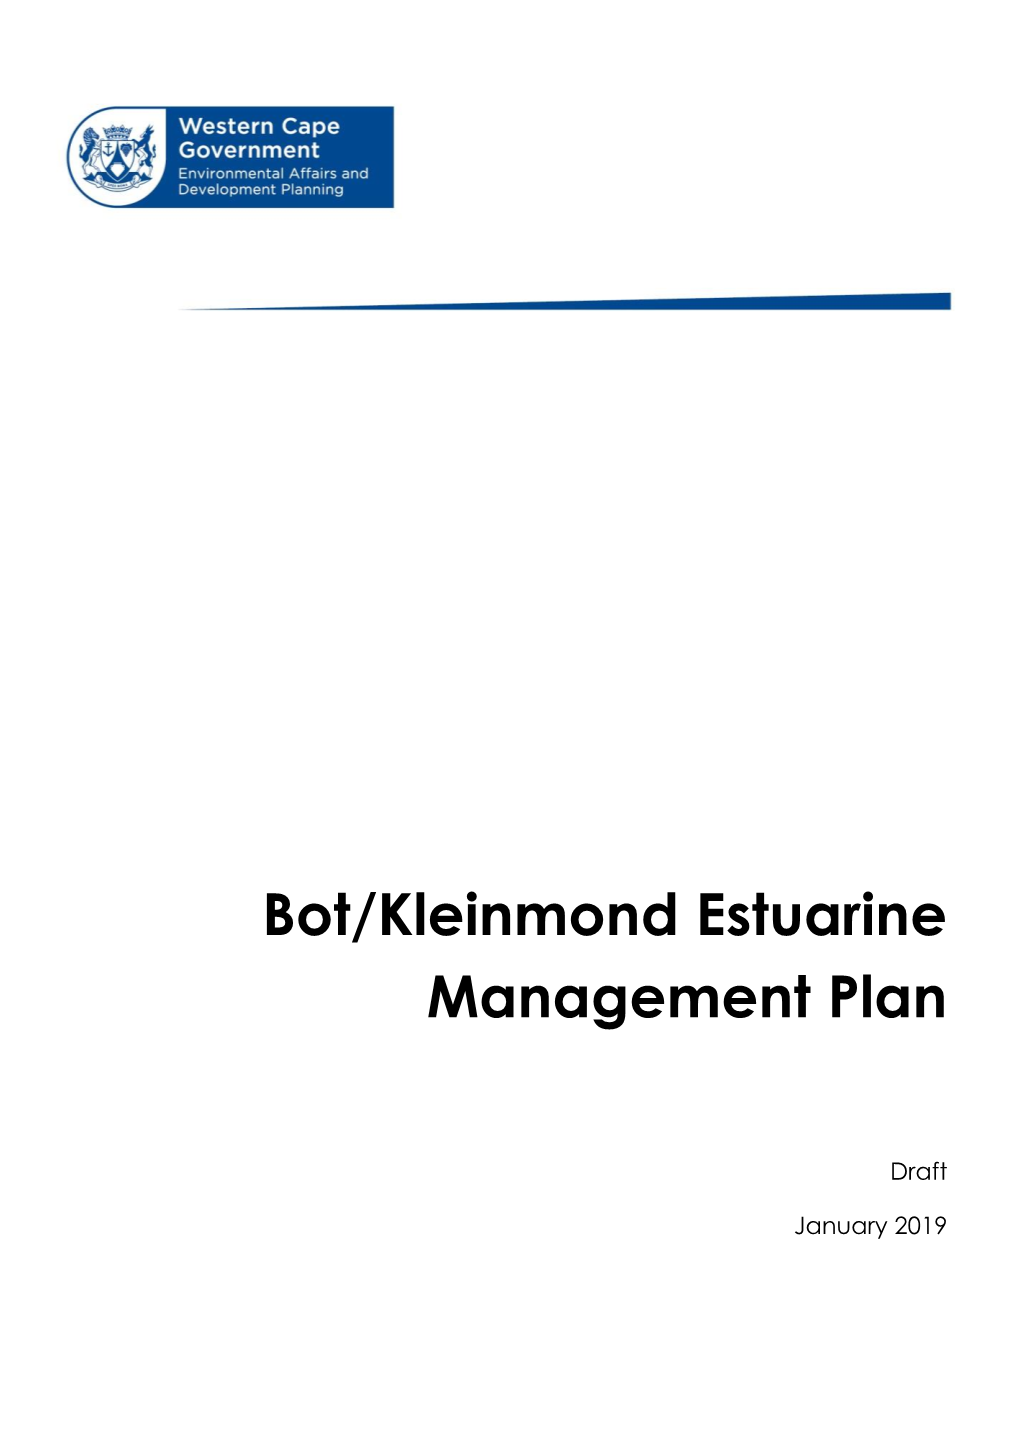 Bot/Kleinmond Estuarine Management Plan